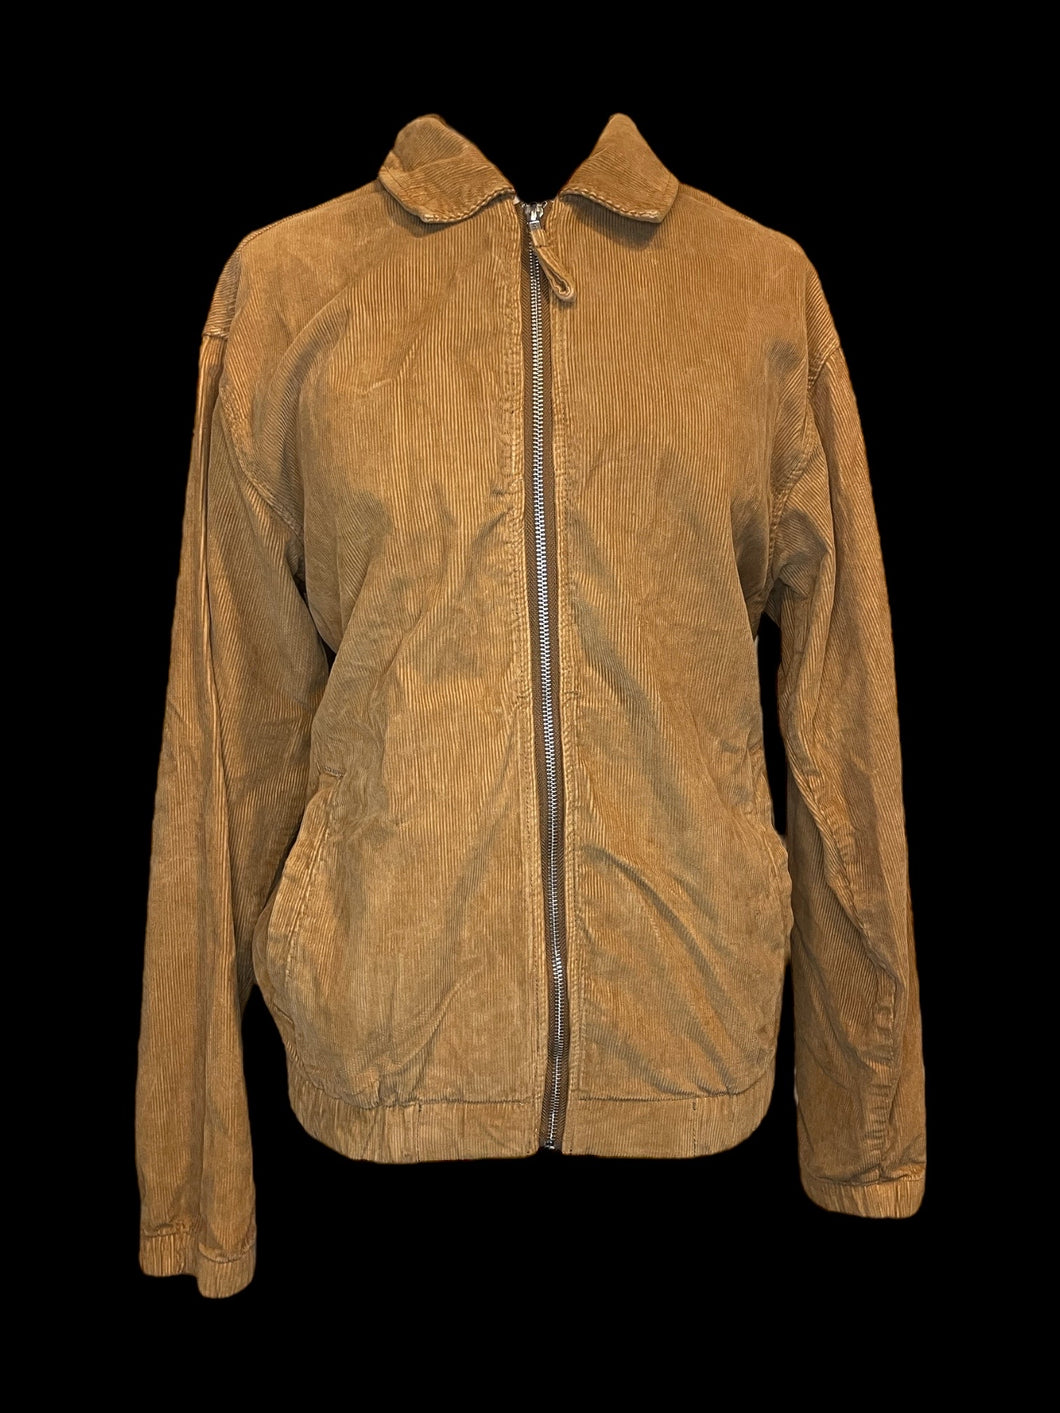 0X Light brown long sleeve zip-up jacket w/ folded collar, & pockets